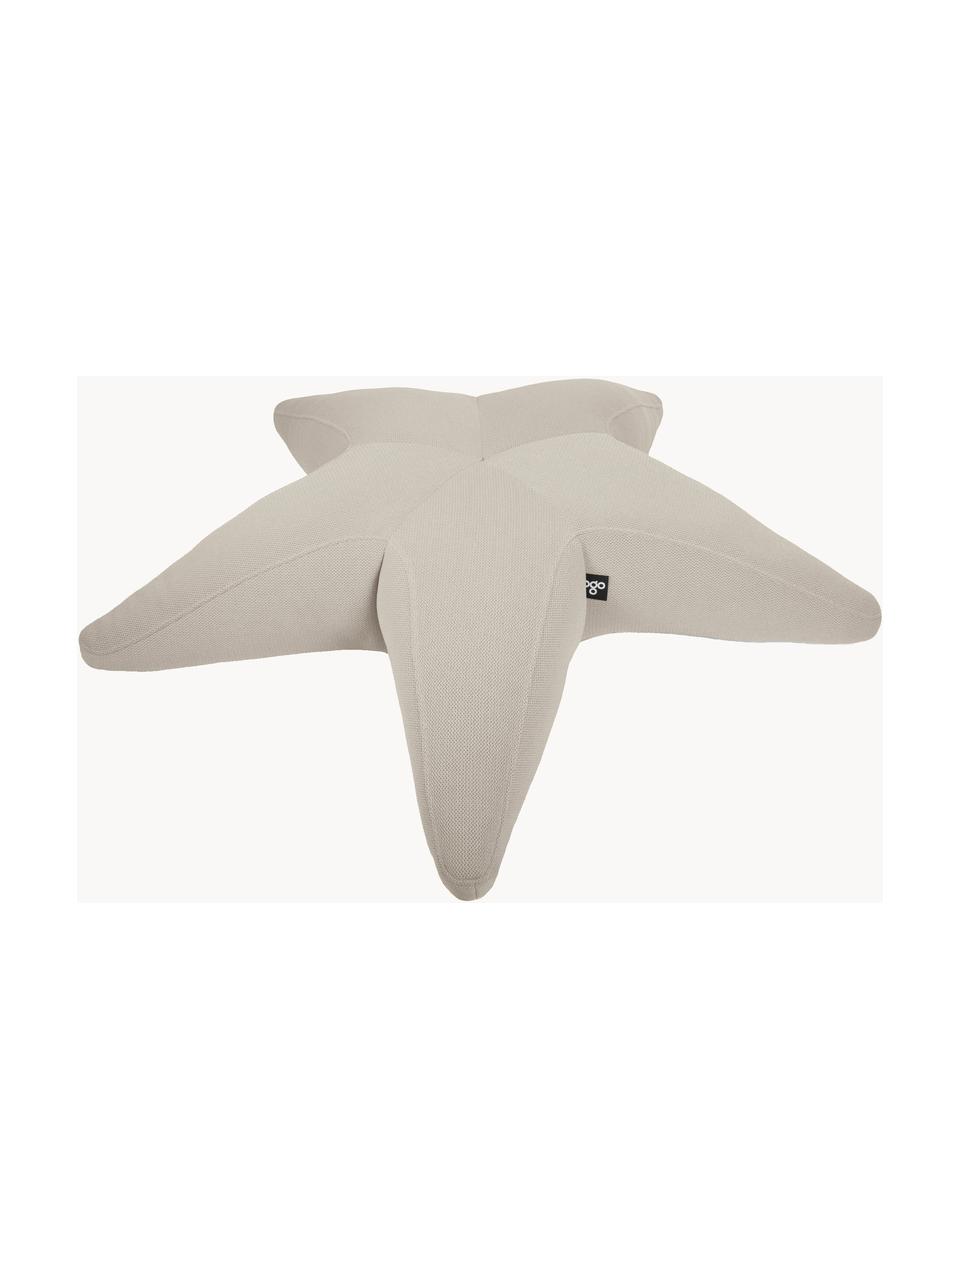 Grosser Outdoor-Sitzsack Starfish, handgefertigt, Bezug: 70 % PAN + 30 % PES, wass, Hellbeige, B 145 x L 145 cm